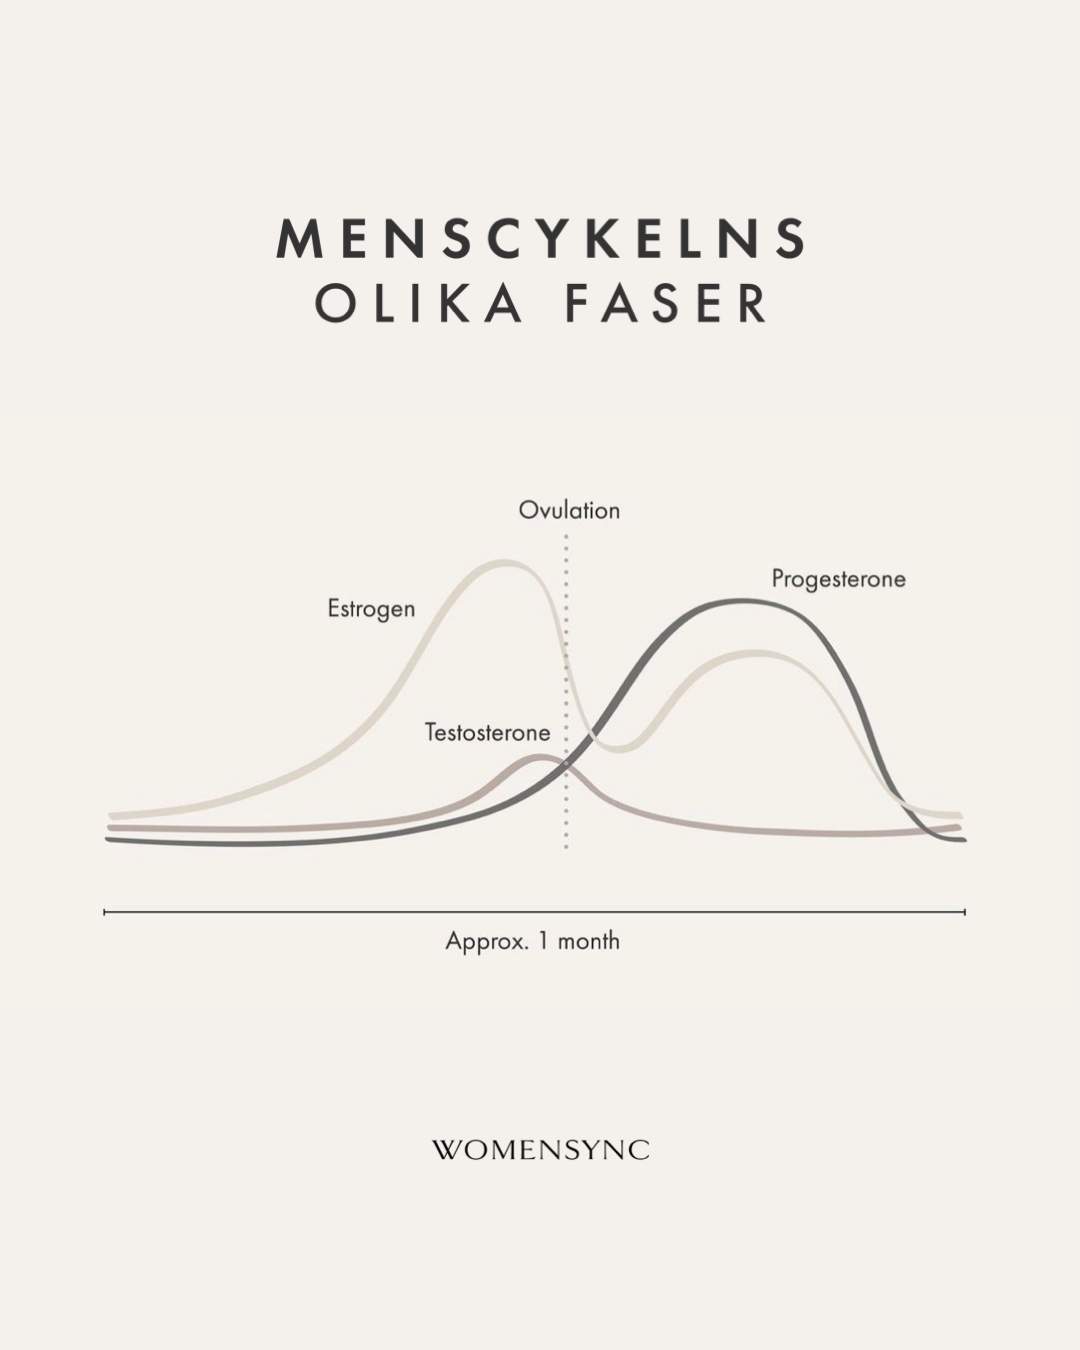 Menscykelns olika faser